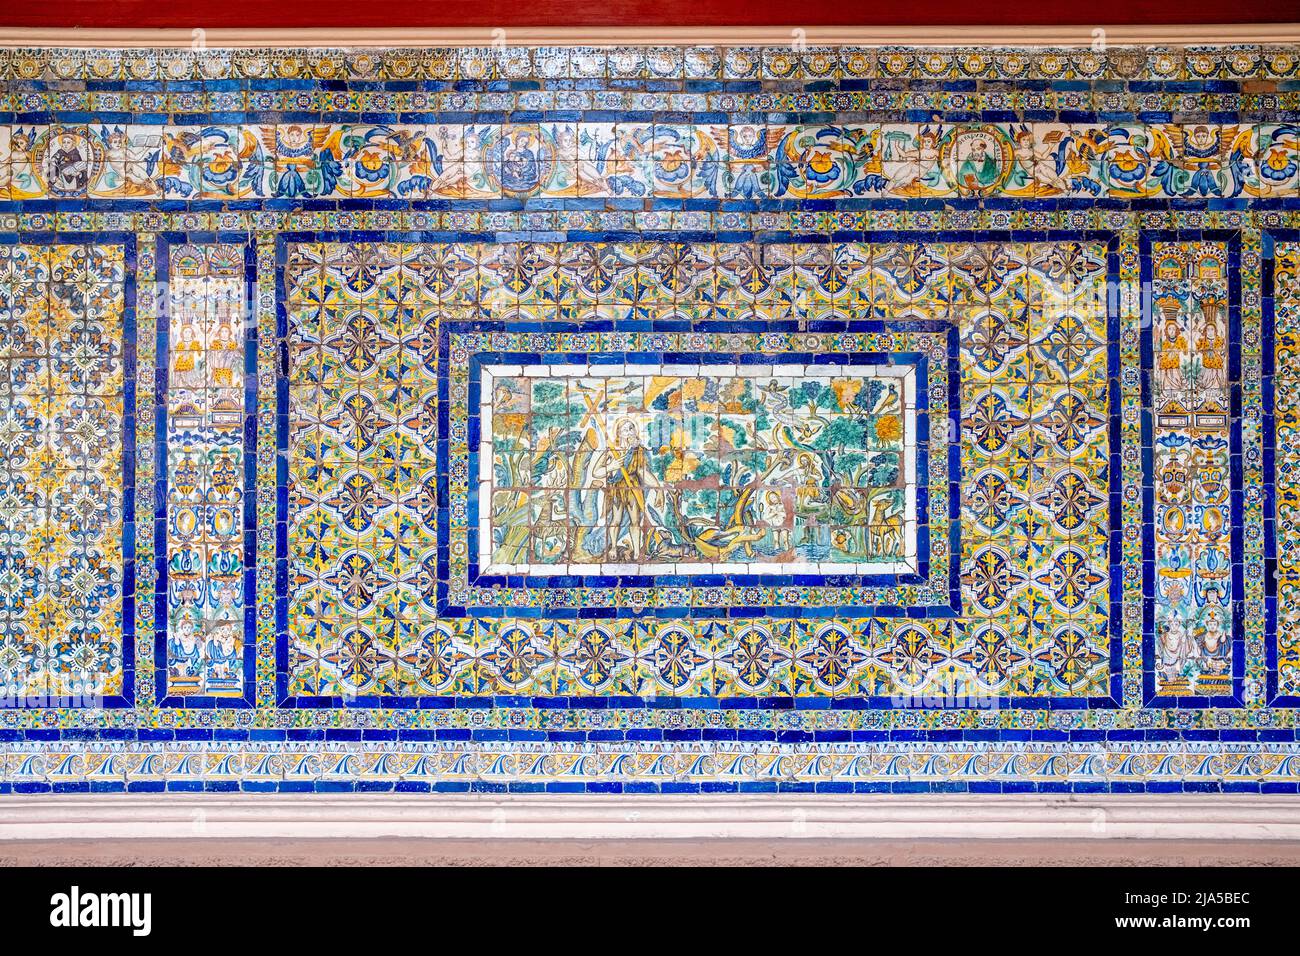 A Colourful Wall Panel at The Santo Domingo Convento, Lima, Peru. Stock Photo